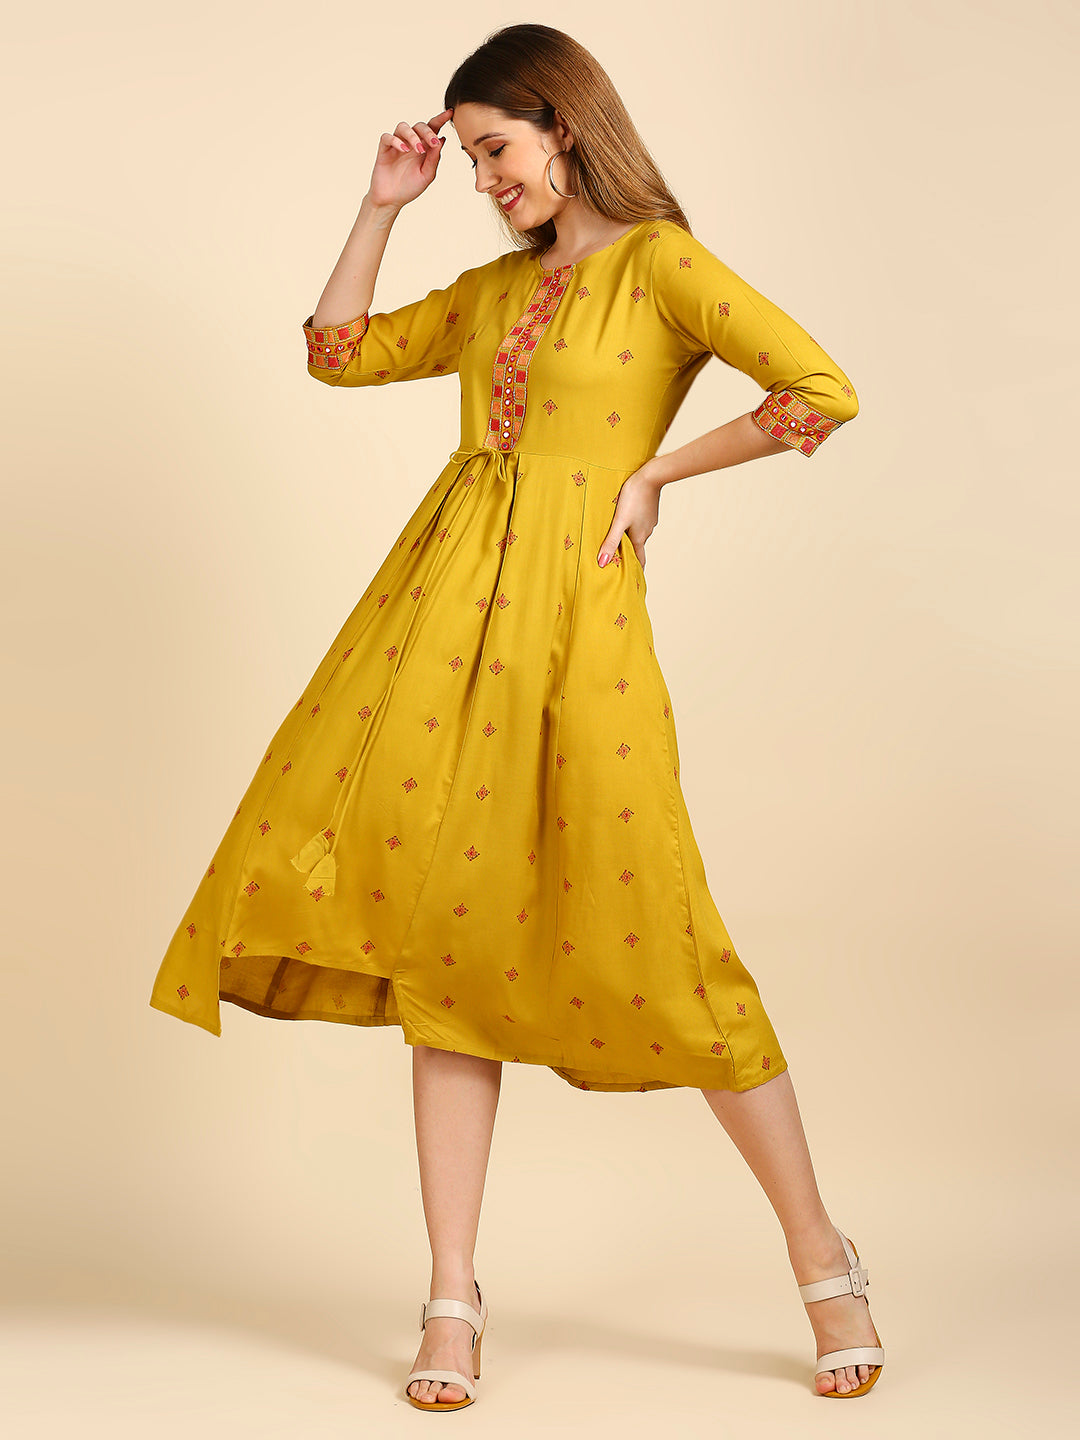 Women's's Mustard Yellow Ethnic Motifs A-Line Midi Dress